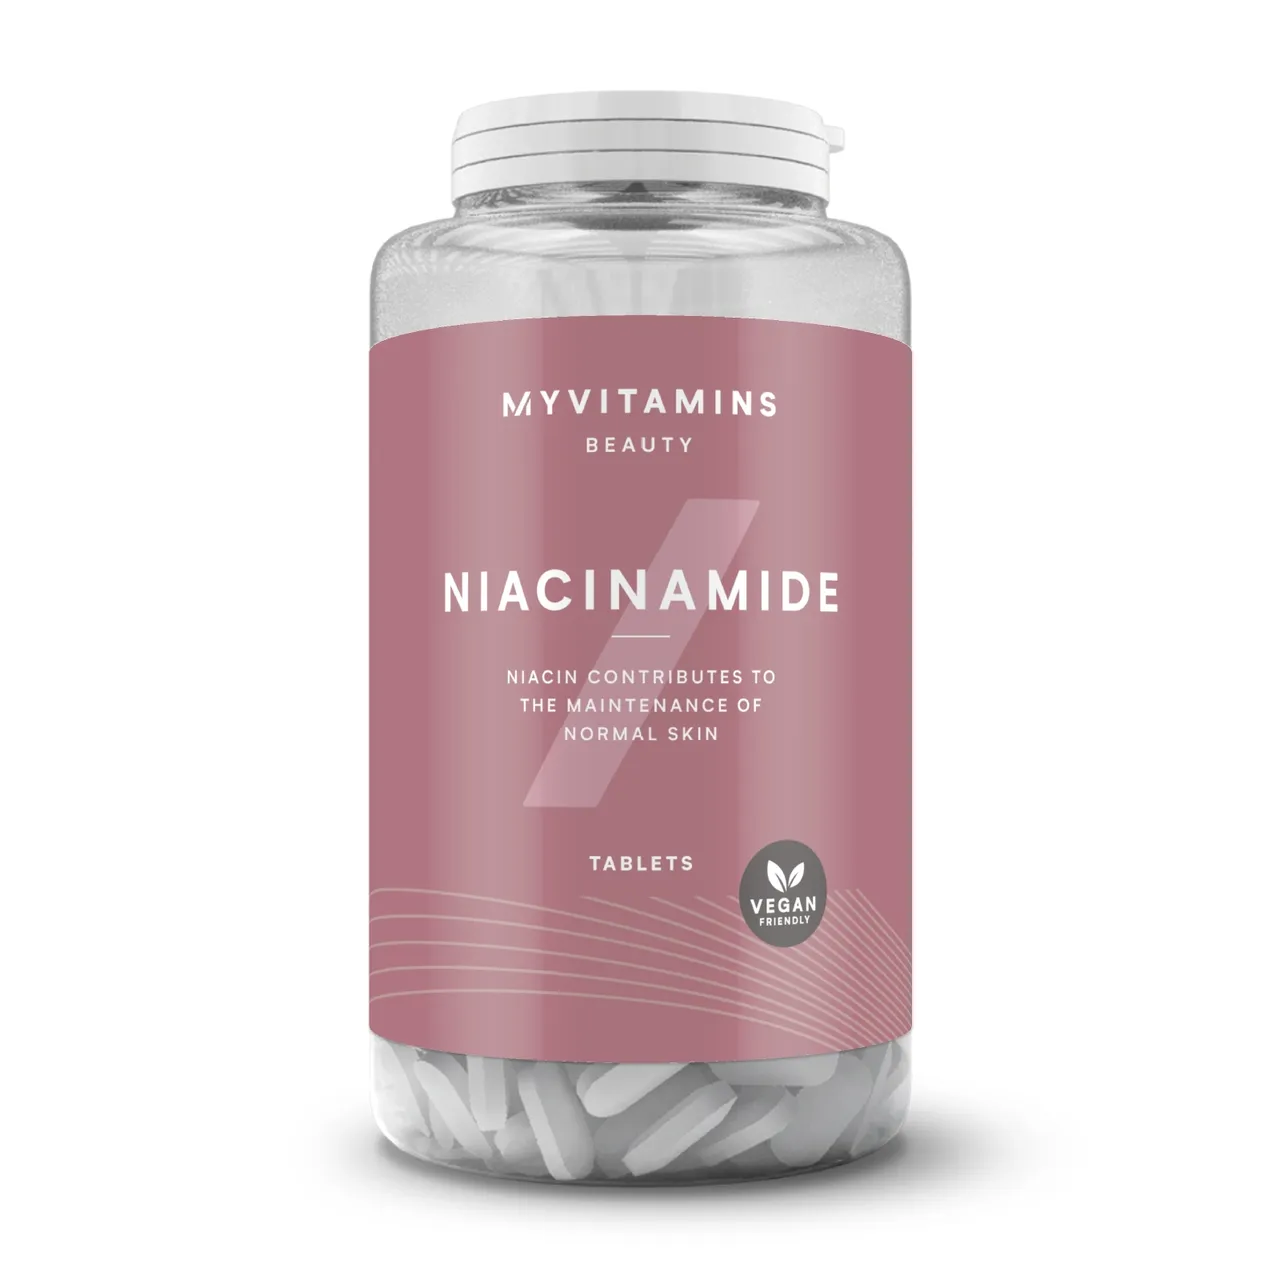 Myvitamins Niacinamide Tablets - 90Tablets